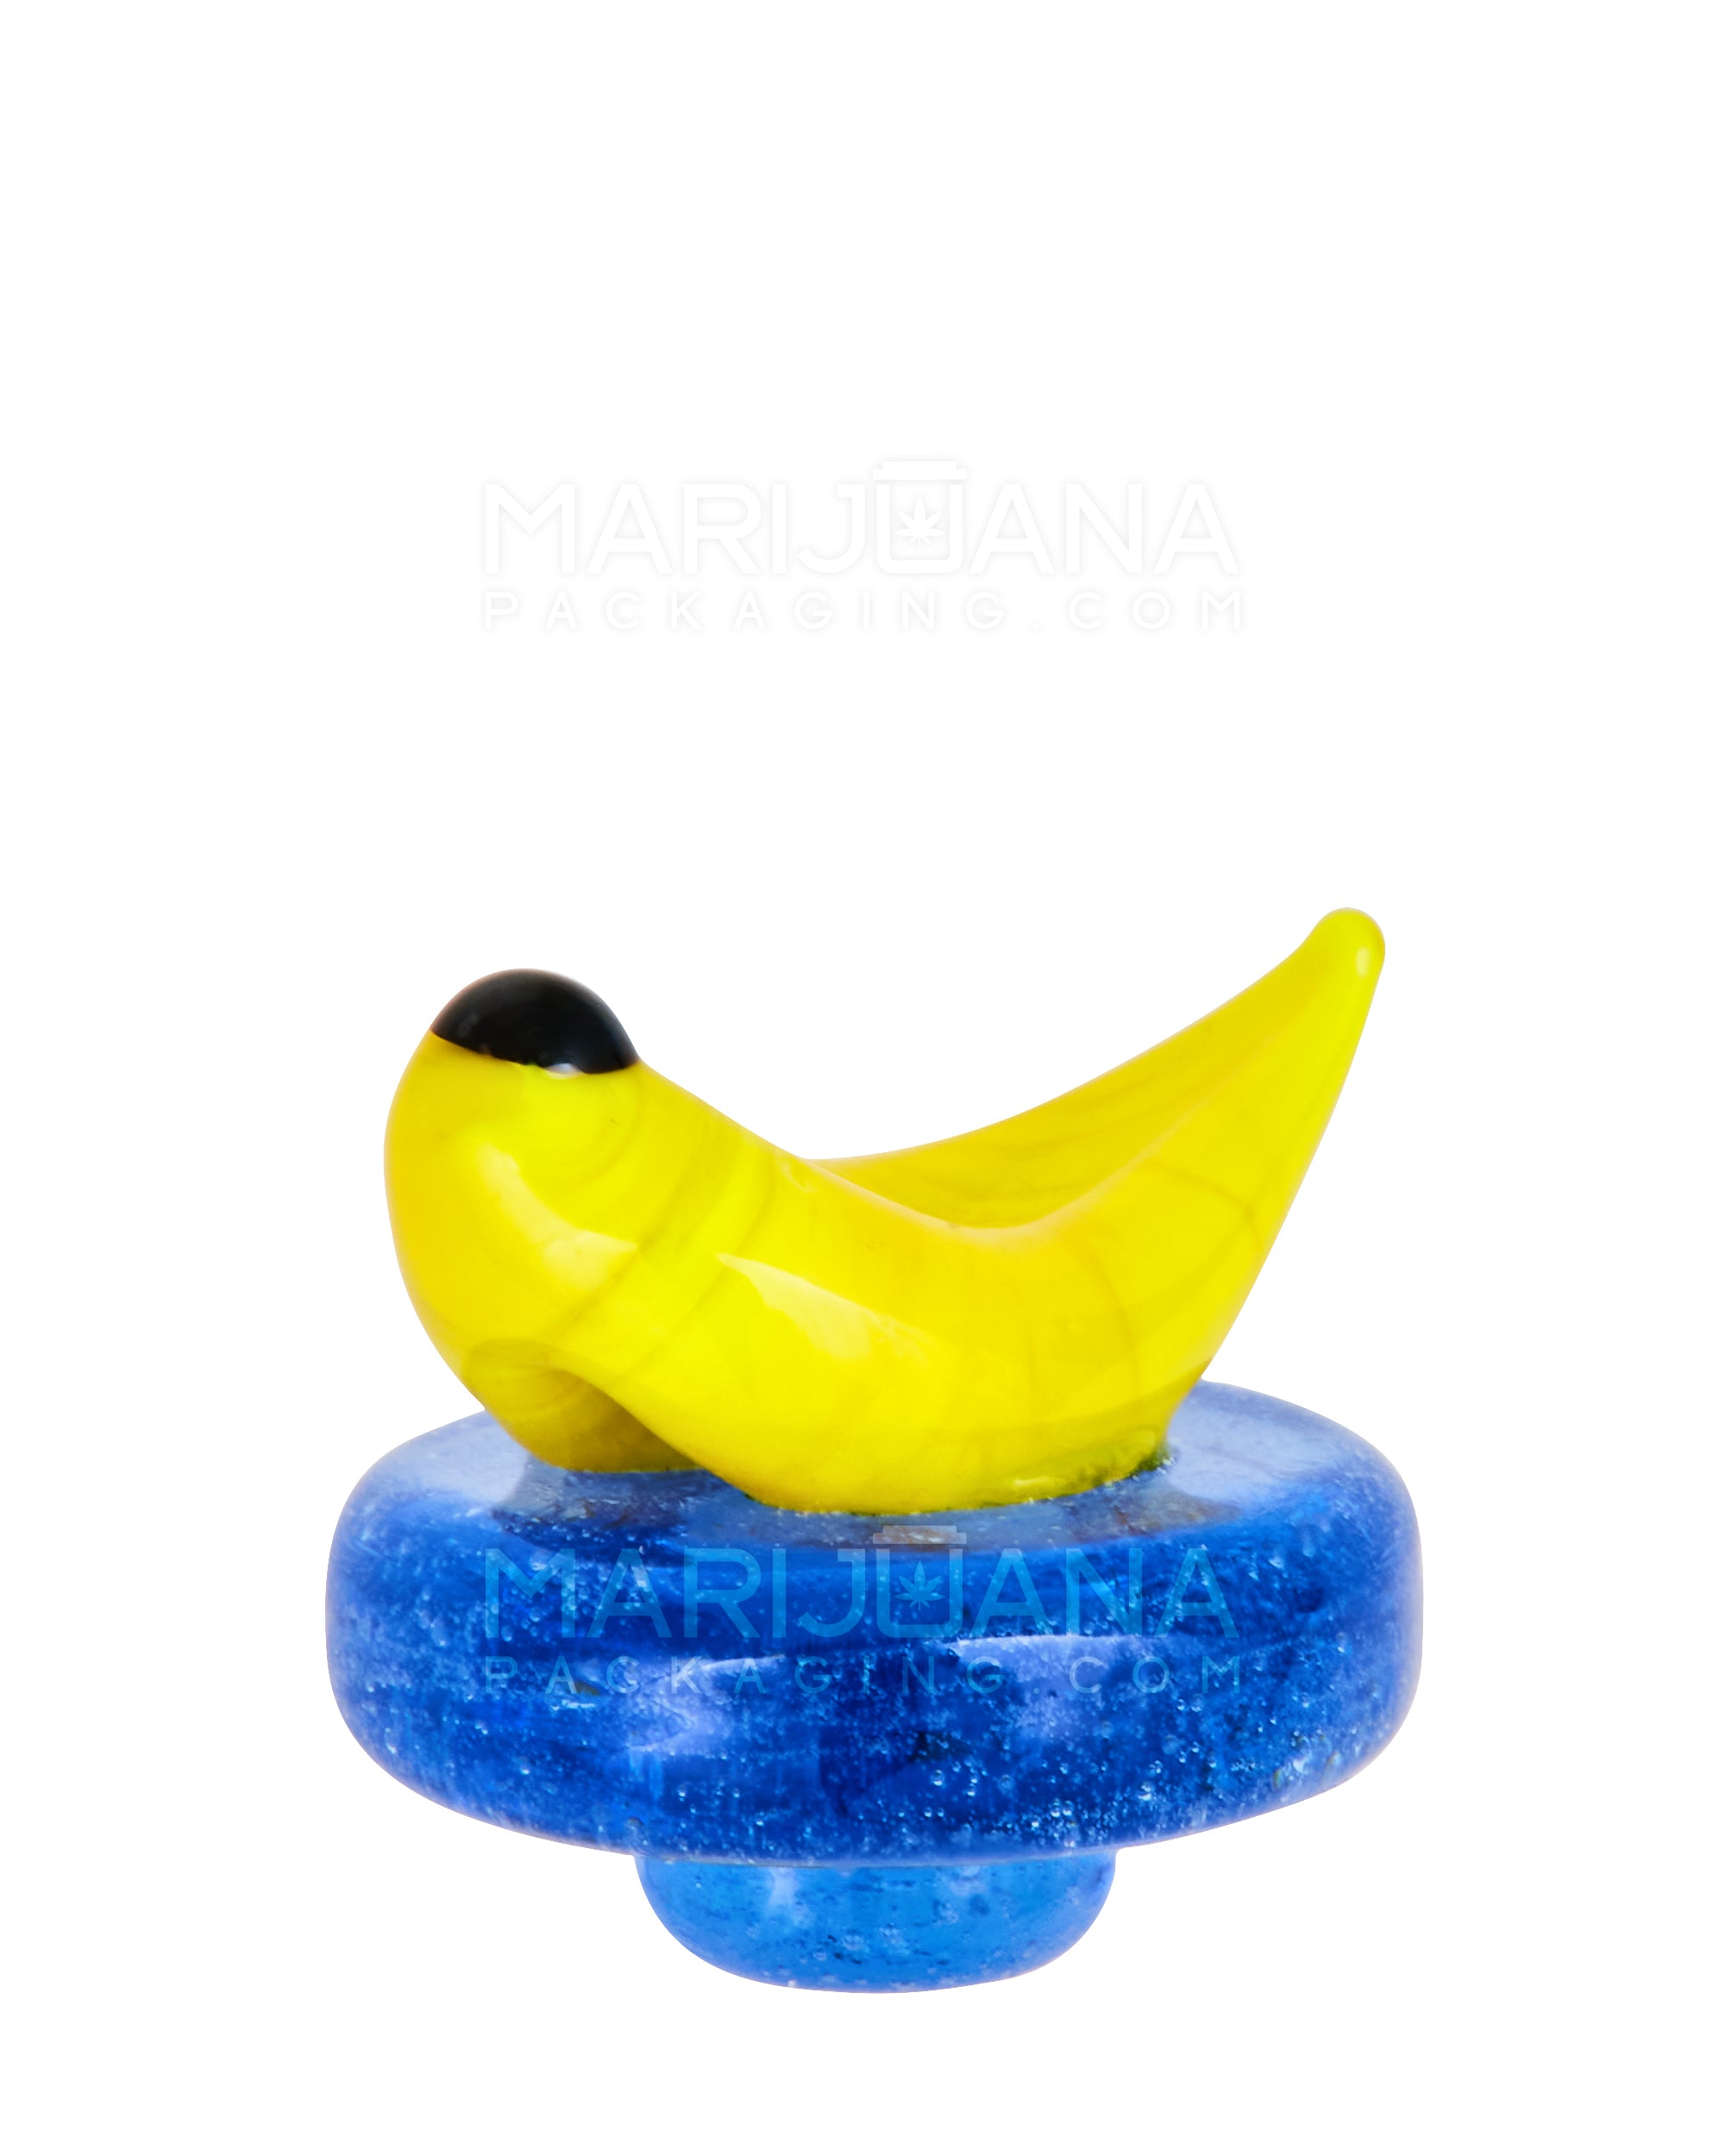 Double Banana Flat Carb Cap | 25mm - Glass - Yellow - 5